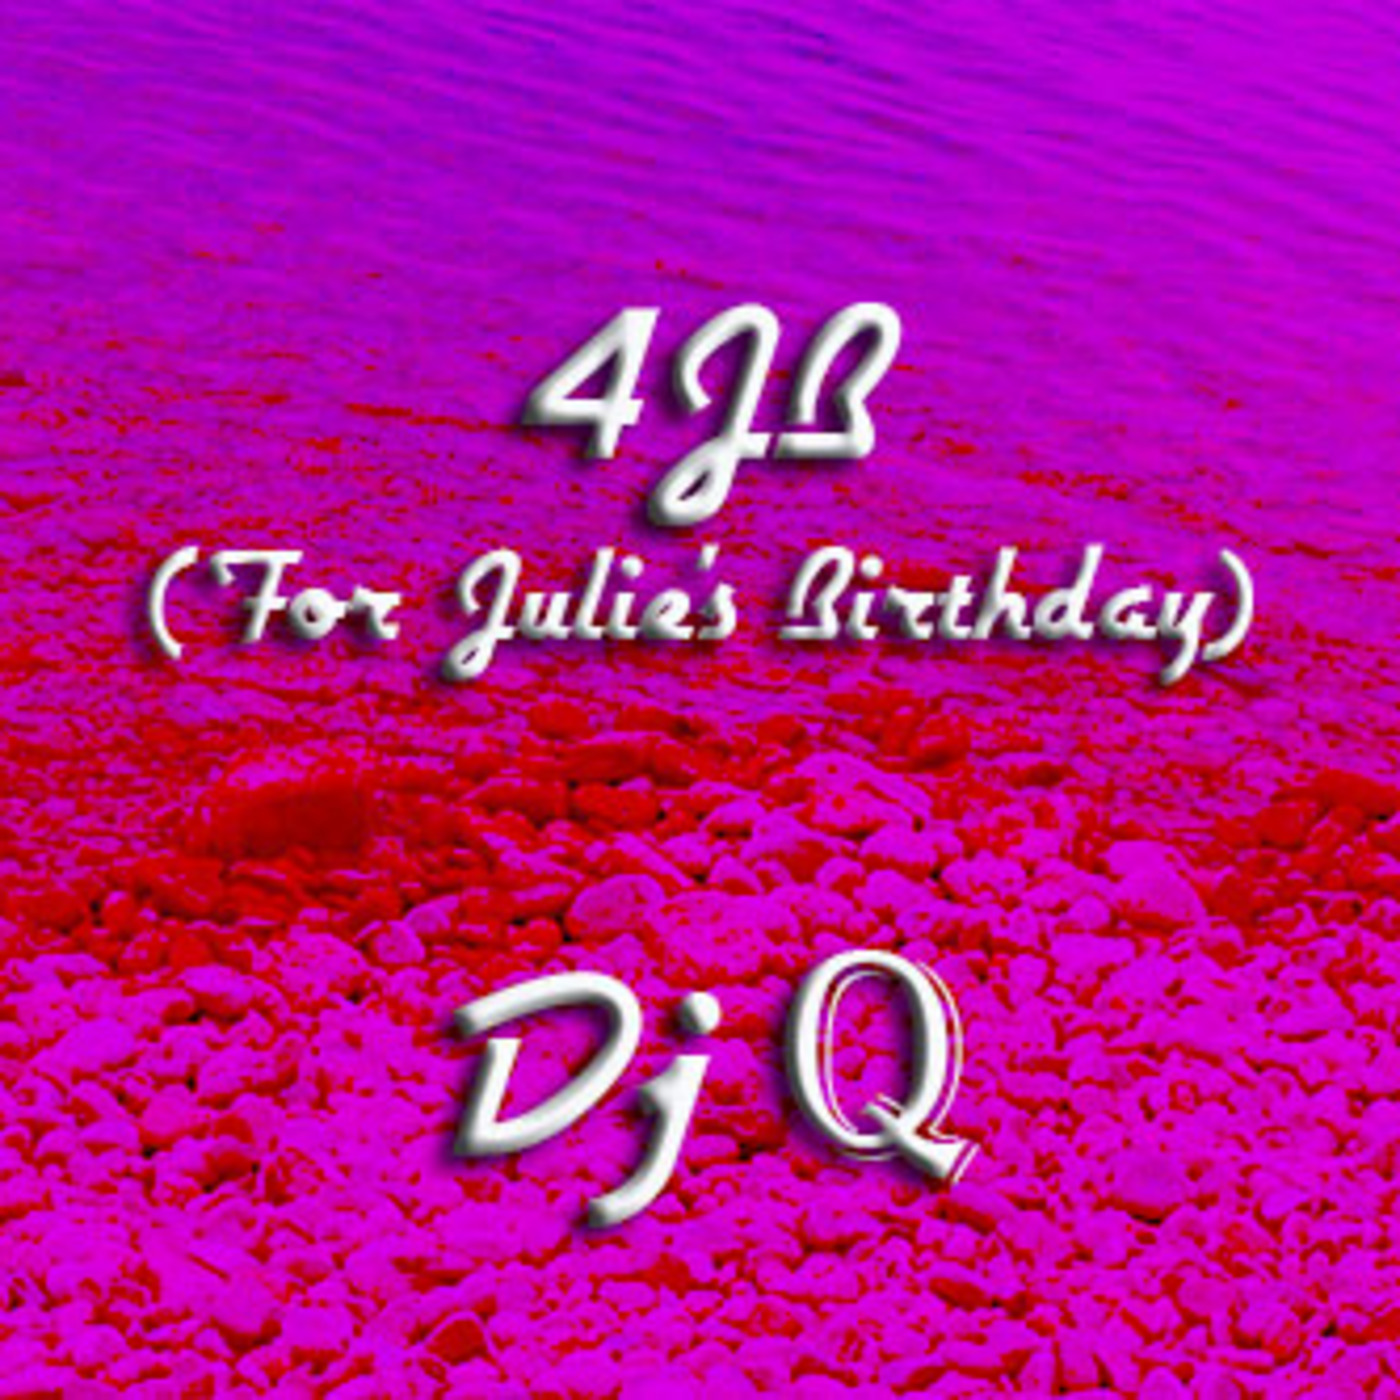 Mr. Deep pt 19 (For Julie's Birthday)